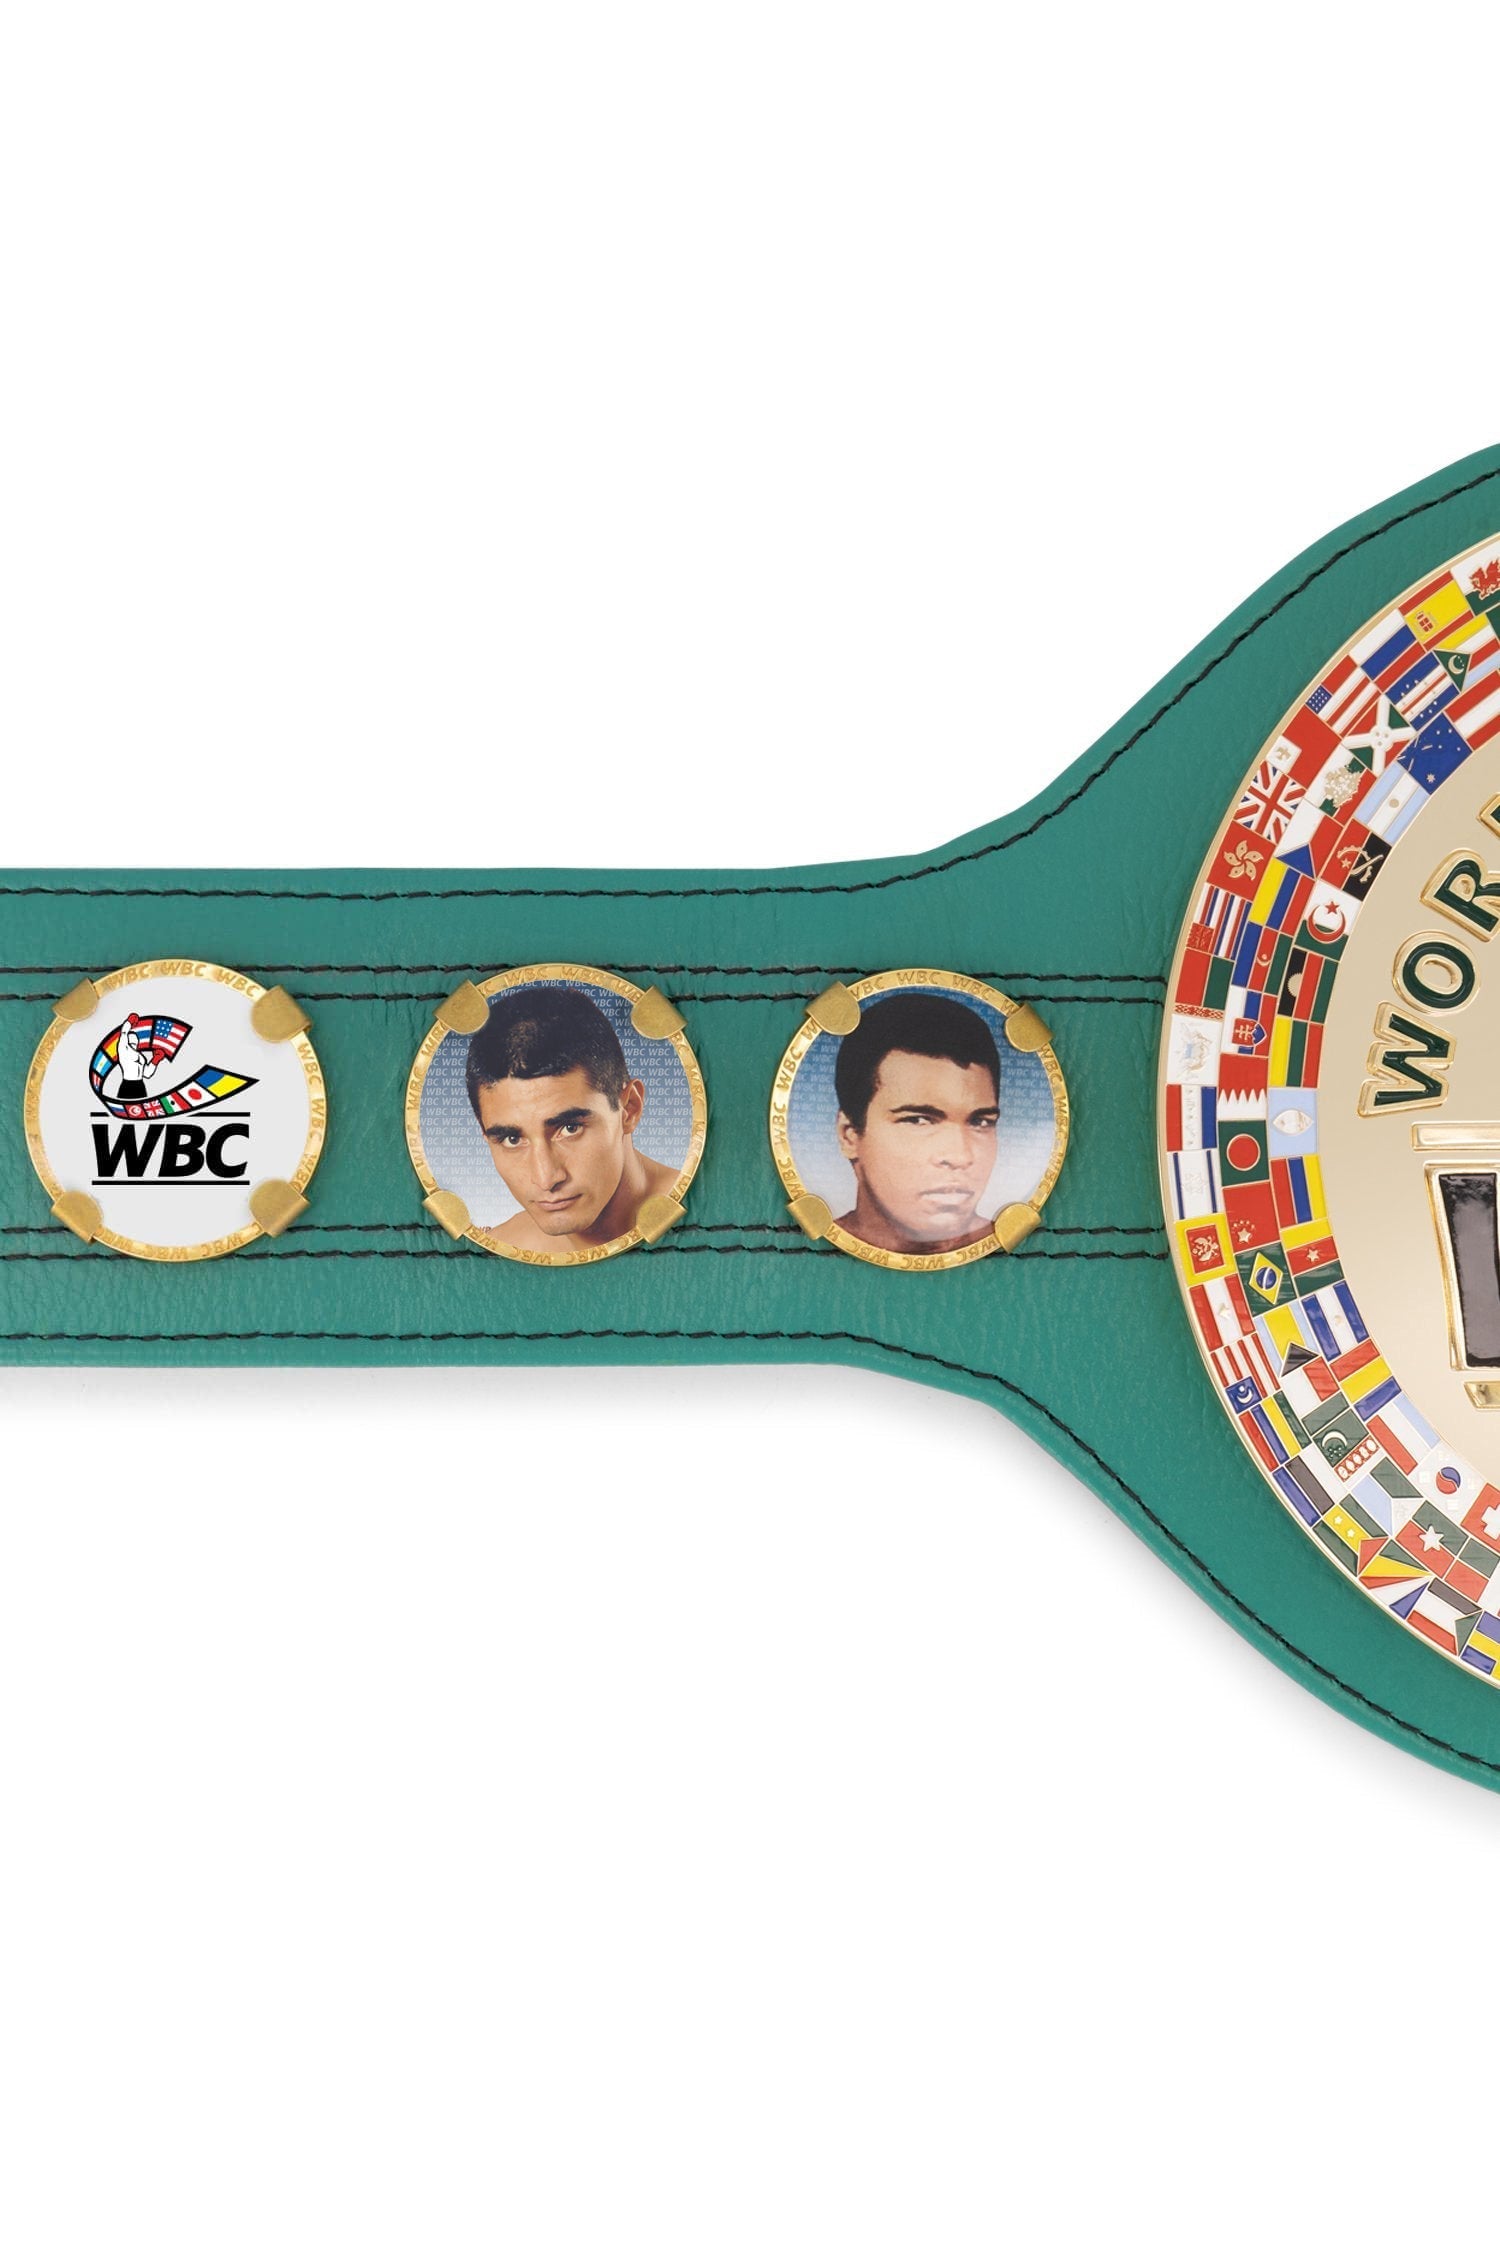 WBC Store Replica Belts WBC Championship Belt  "Historic Fights" Erik Morales vs. Manny Pacquiao I